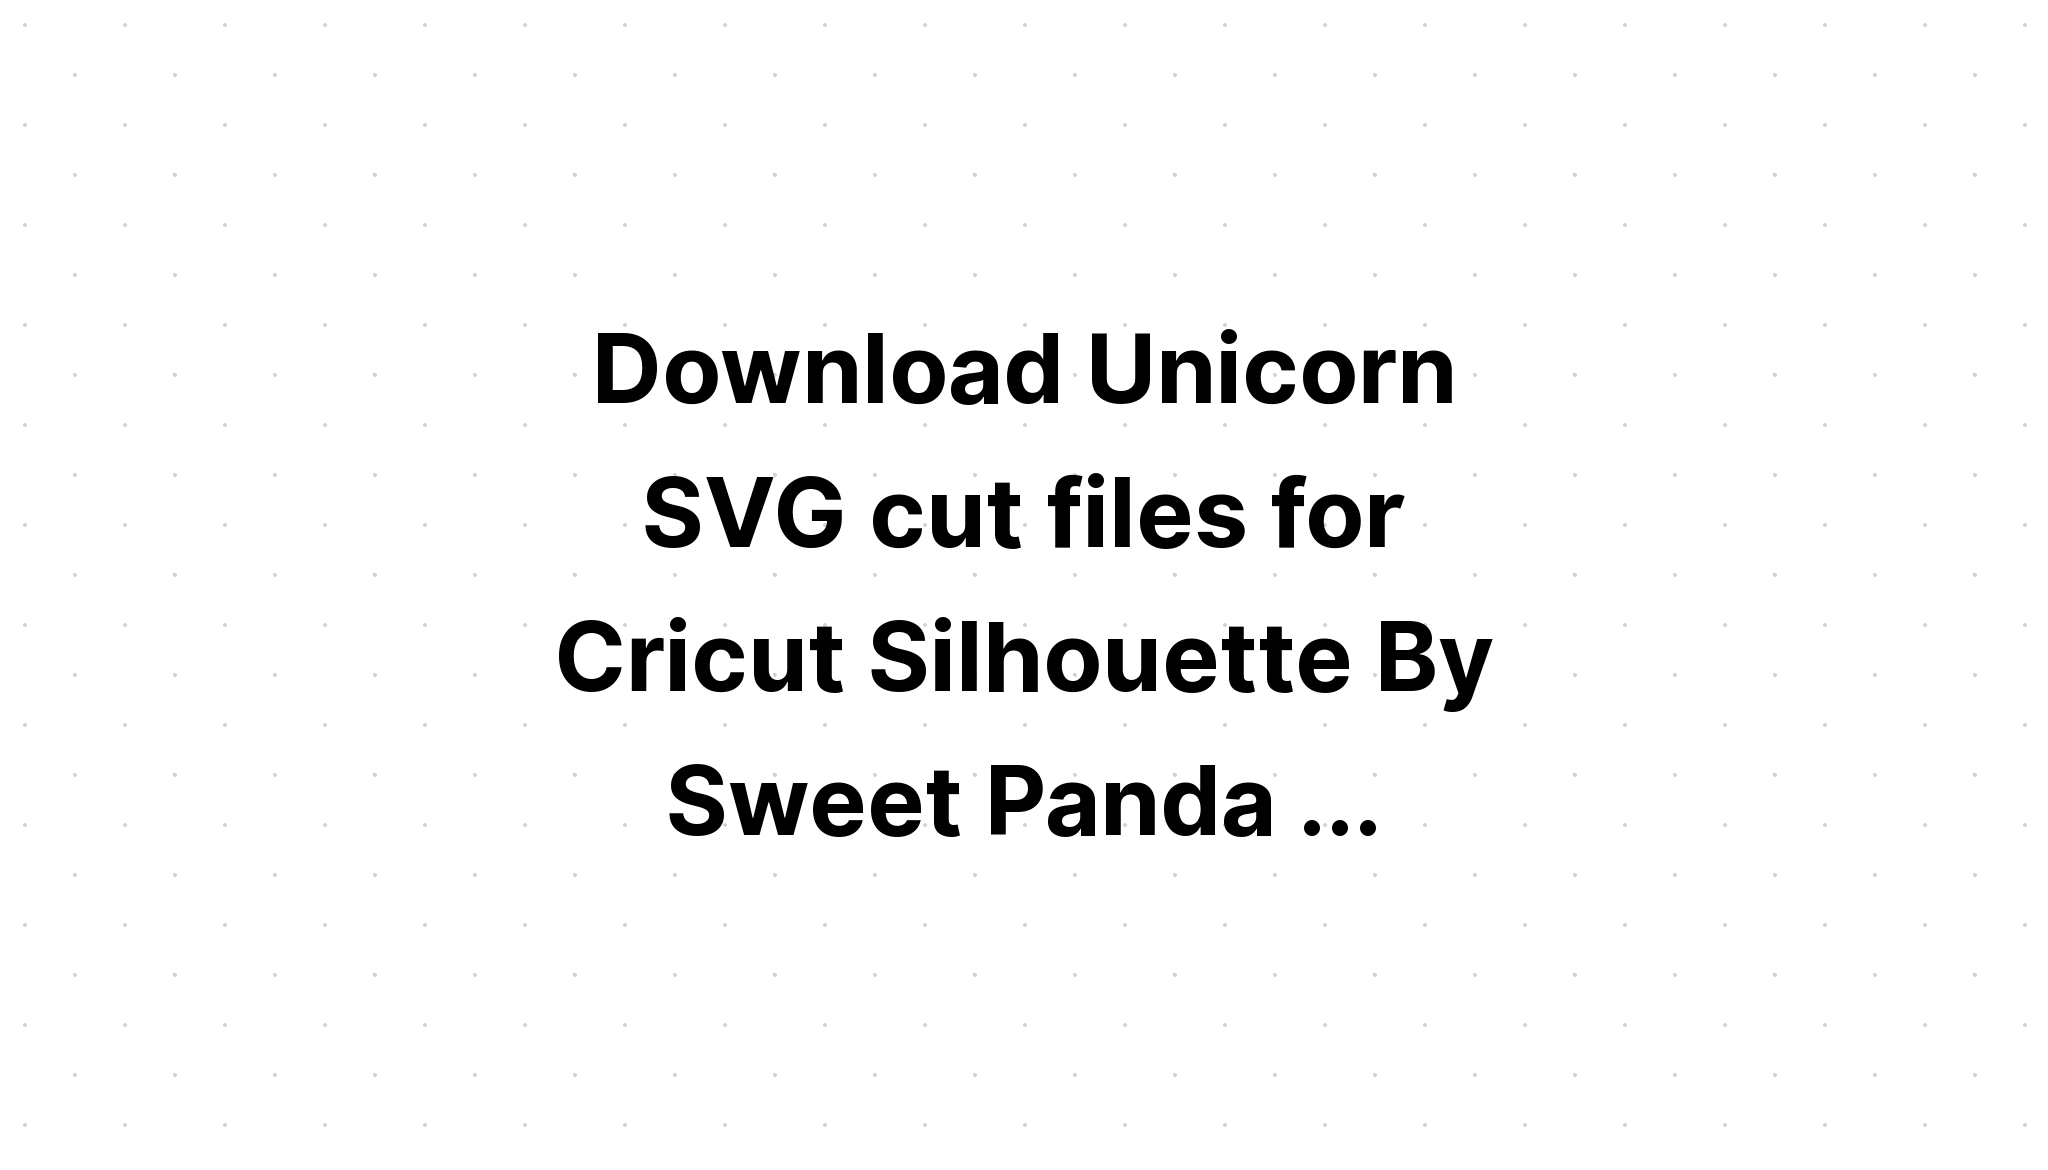 Download Free Disney Multi Layered Svg Files For Cricut - Layered SVG Cut File